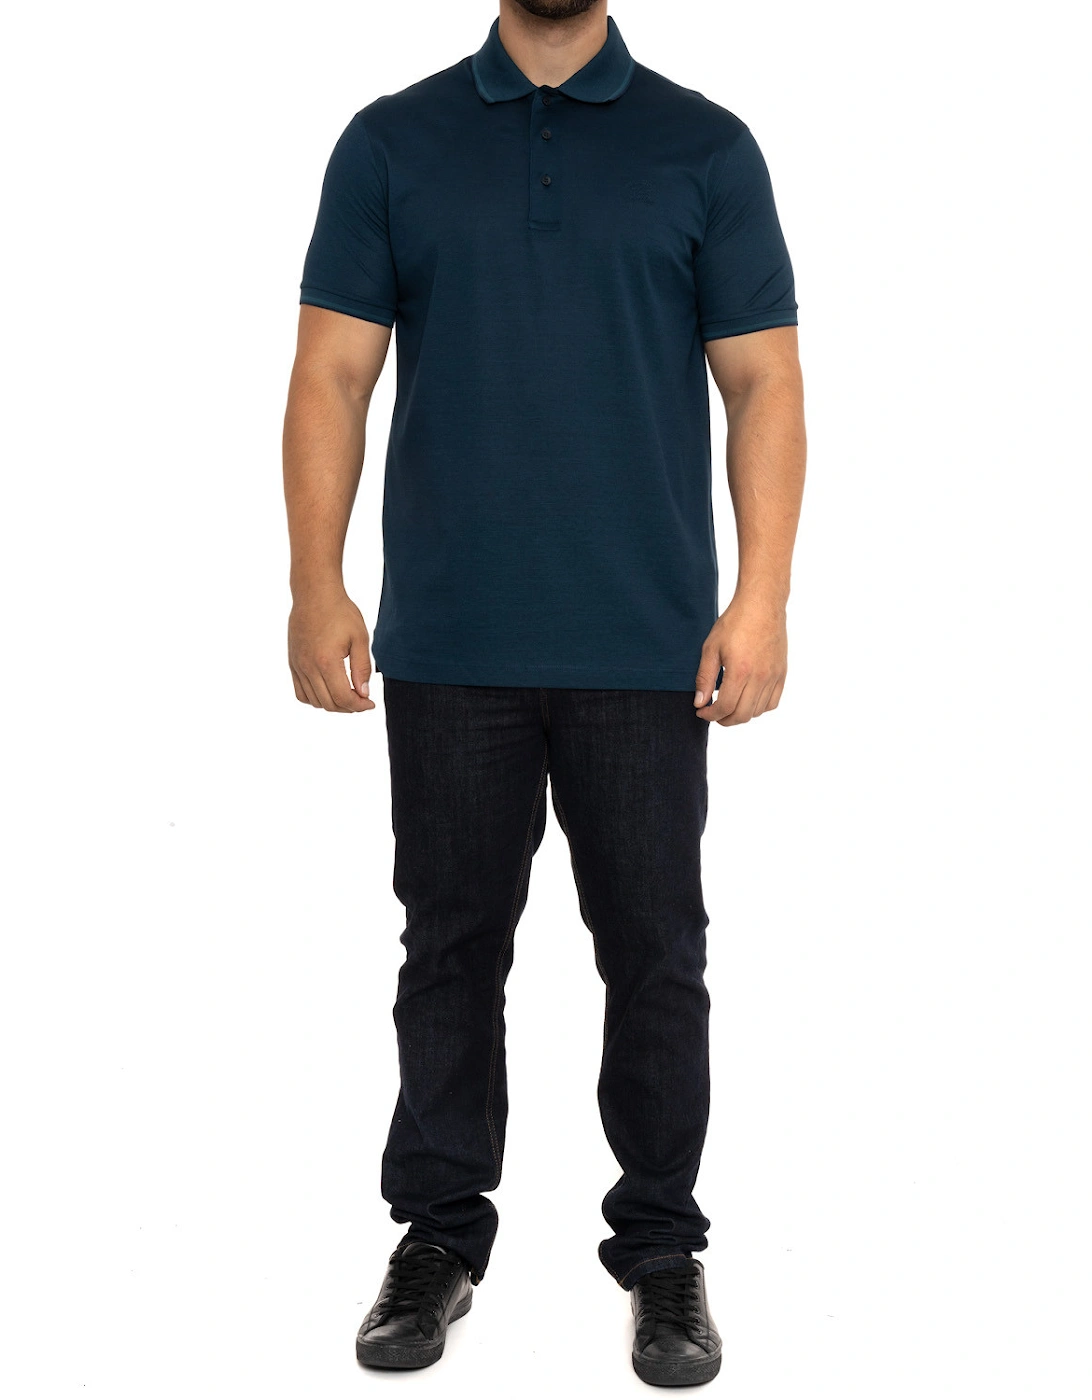 Mens 3-1 Kompact Tech Polo Shirt (Dark Turquoise)